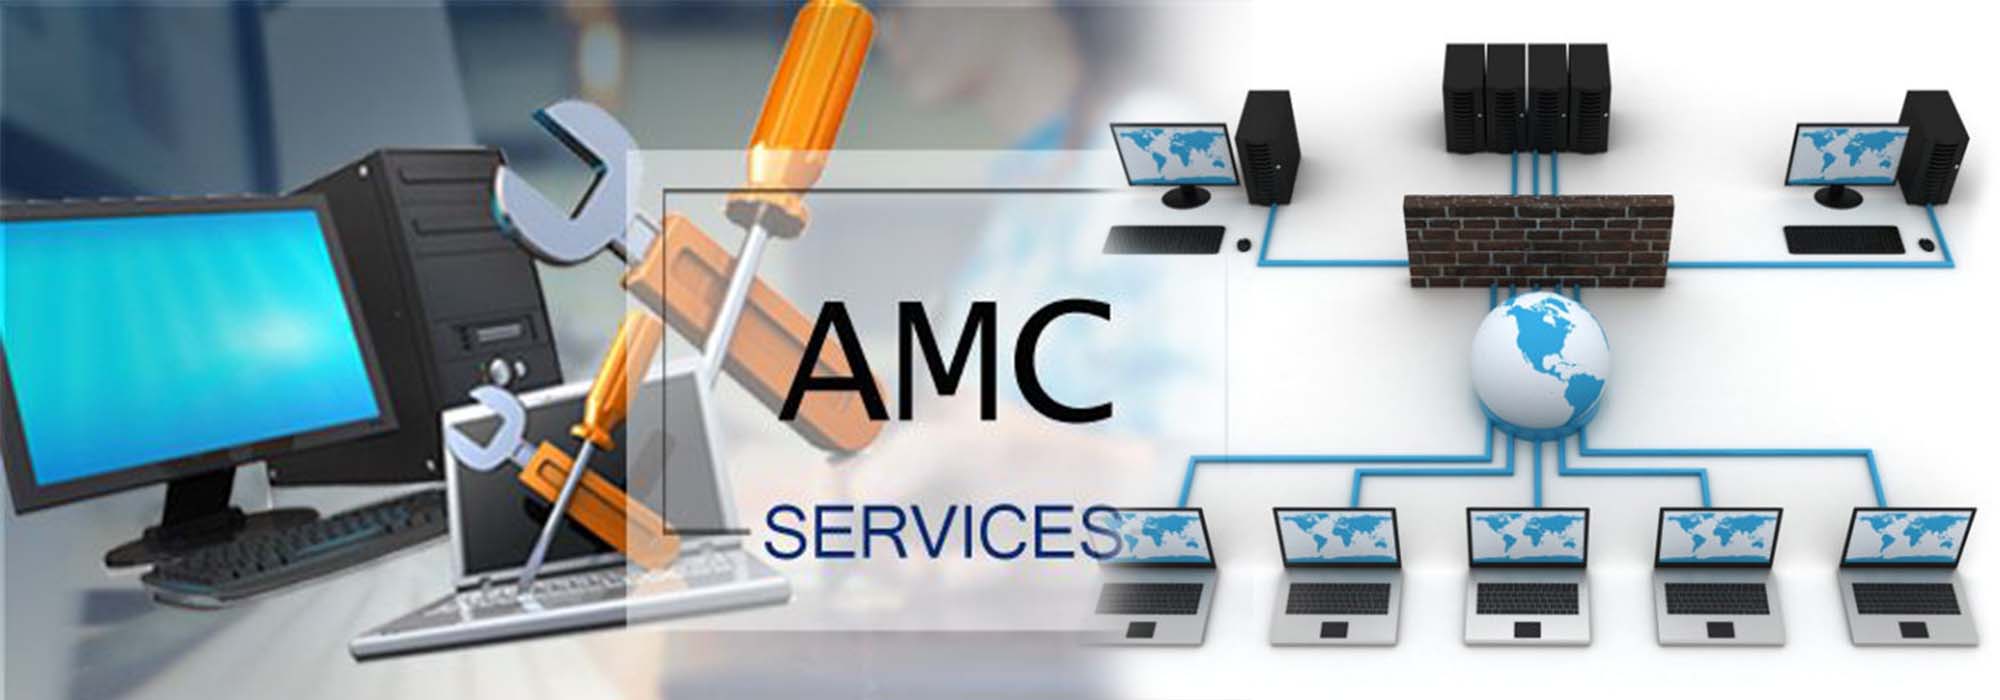 Network AMC Services